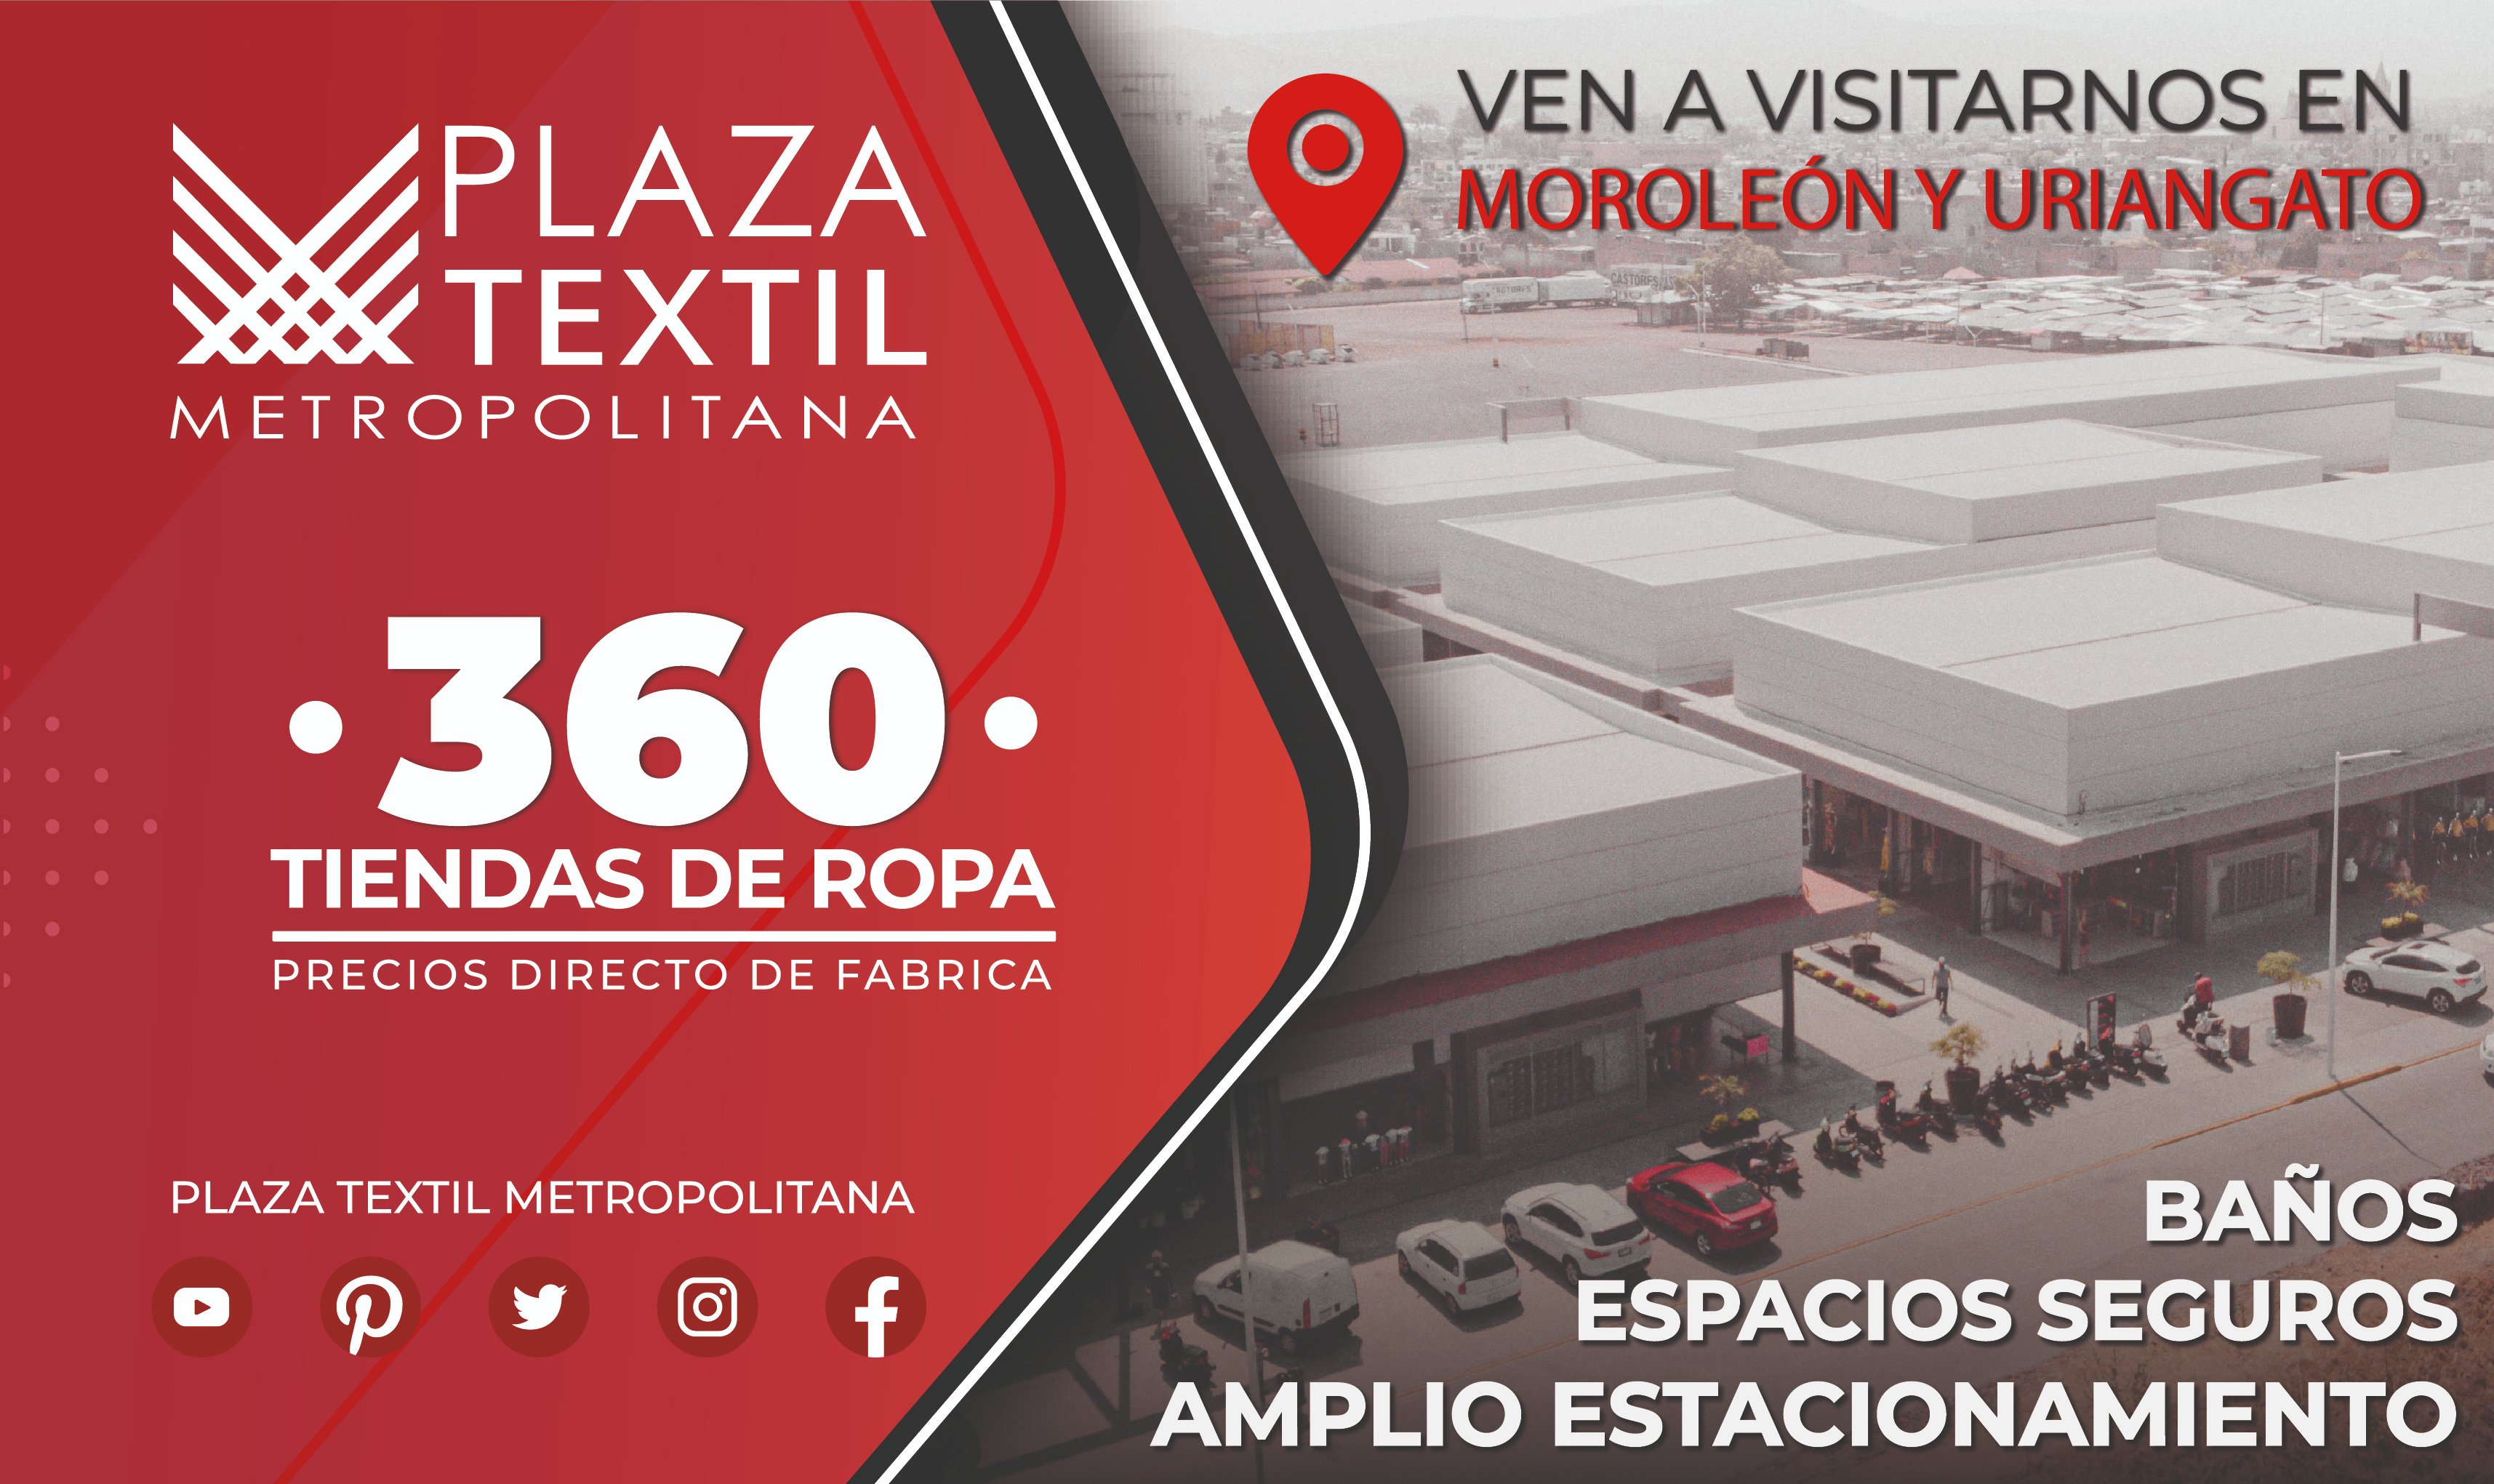 Plaza Textil Metropolitana on Twitter: 